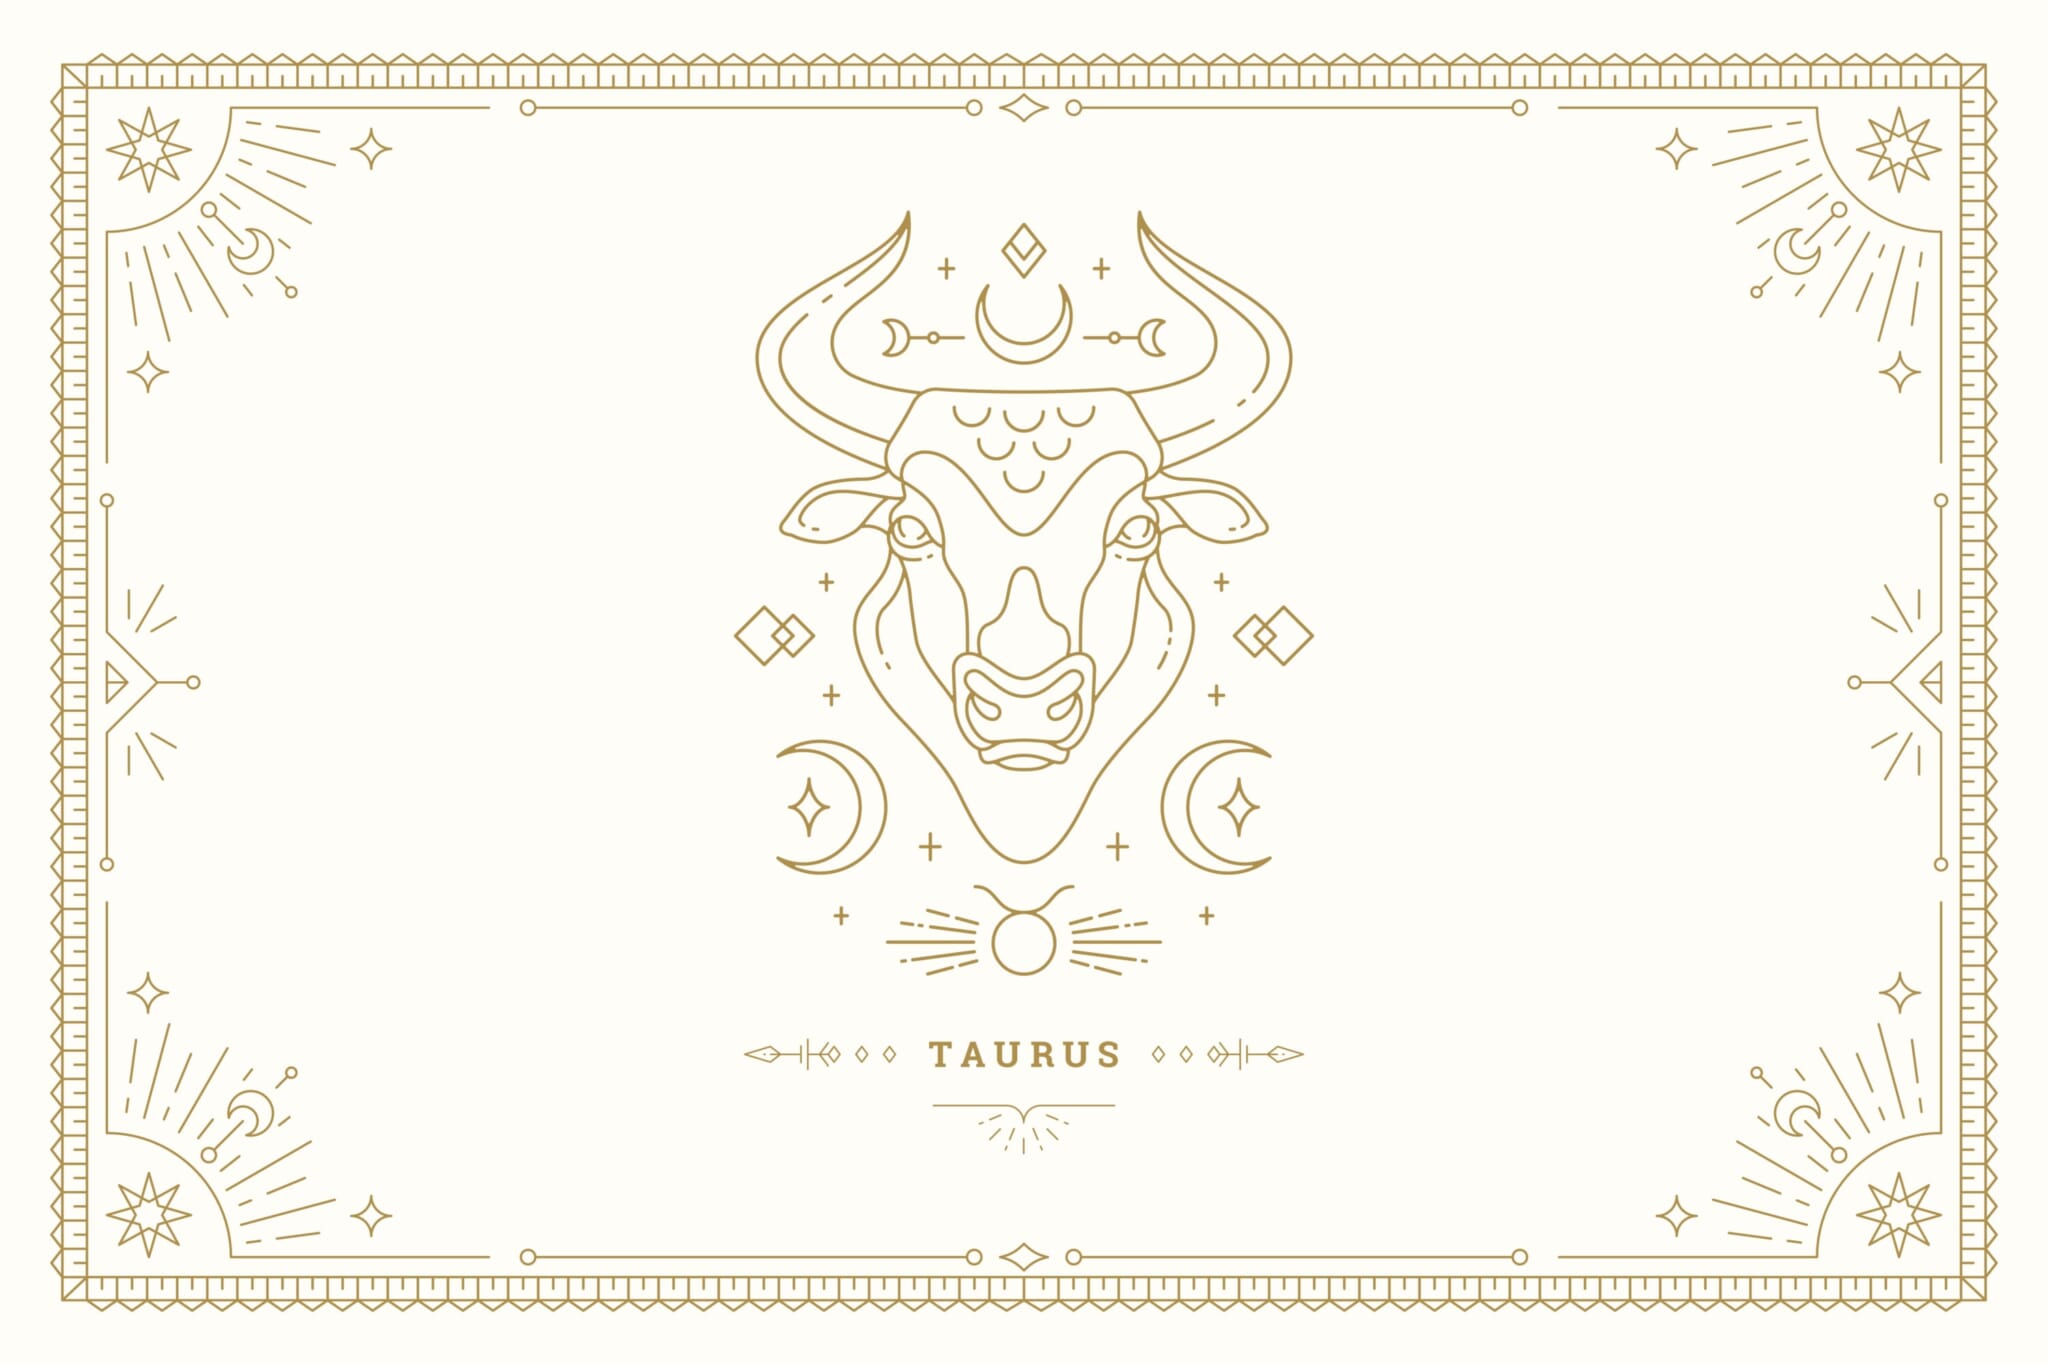 taurus march horoscope 